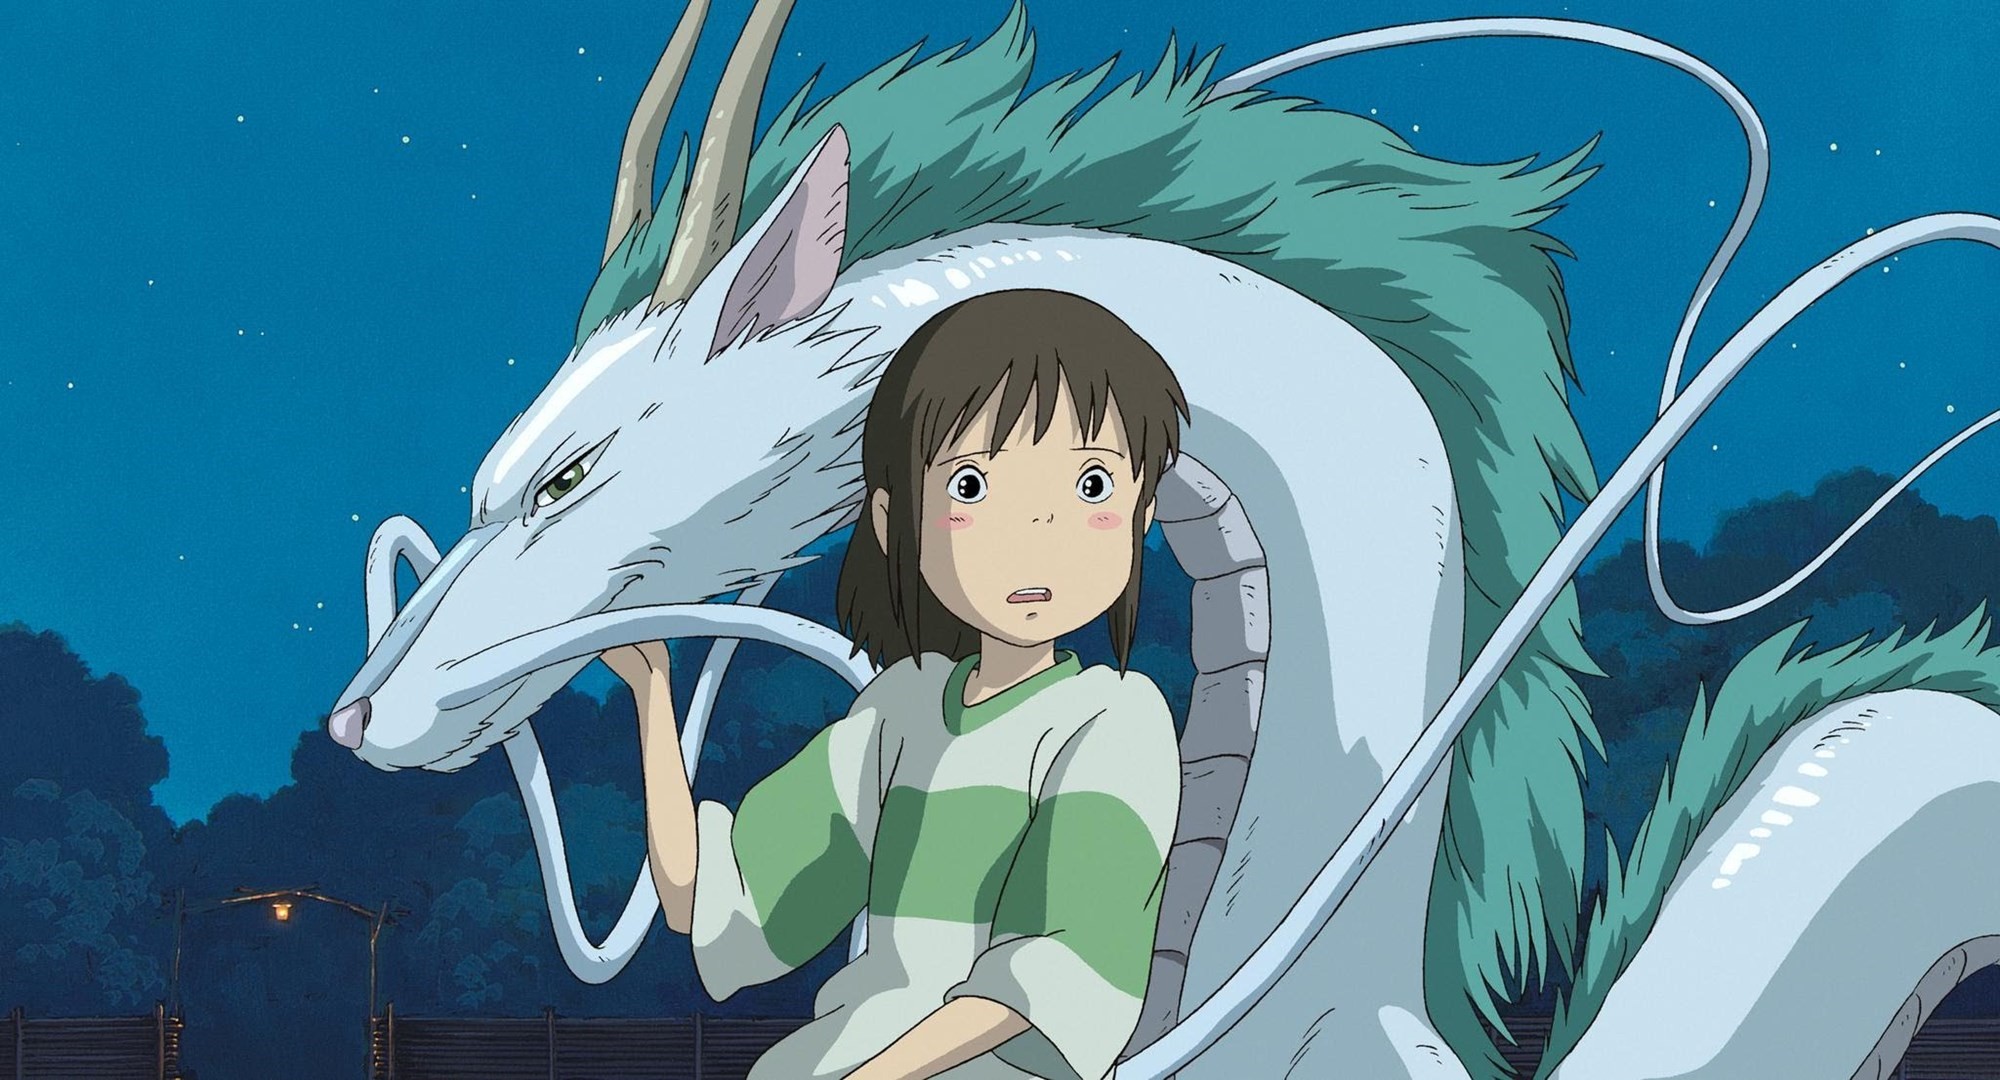 What makes Studio Ghibli so magically immersive?